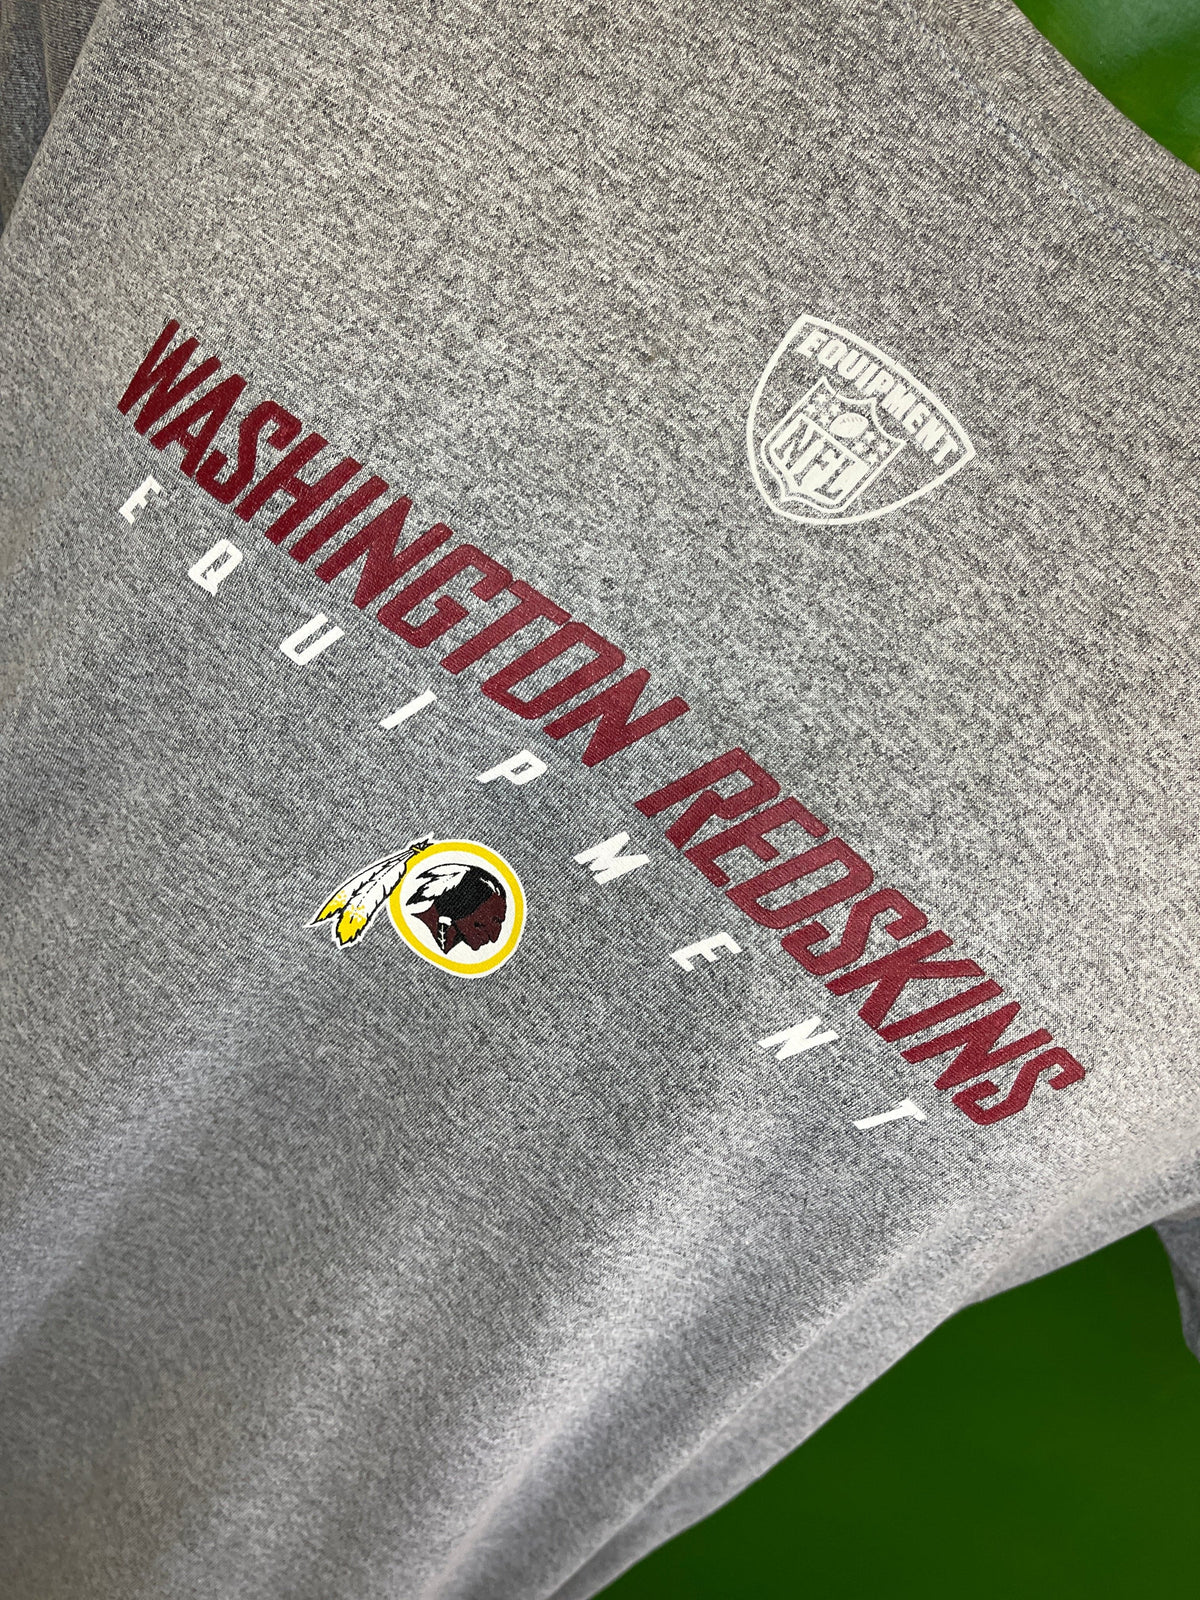 NFL Washington Commanders (Redskins) On Field T-Shirt Youth Large 14-16